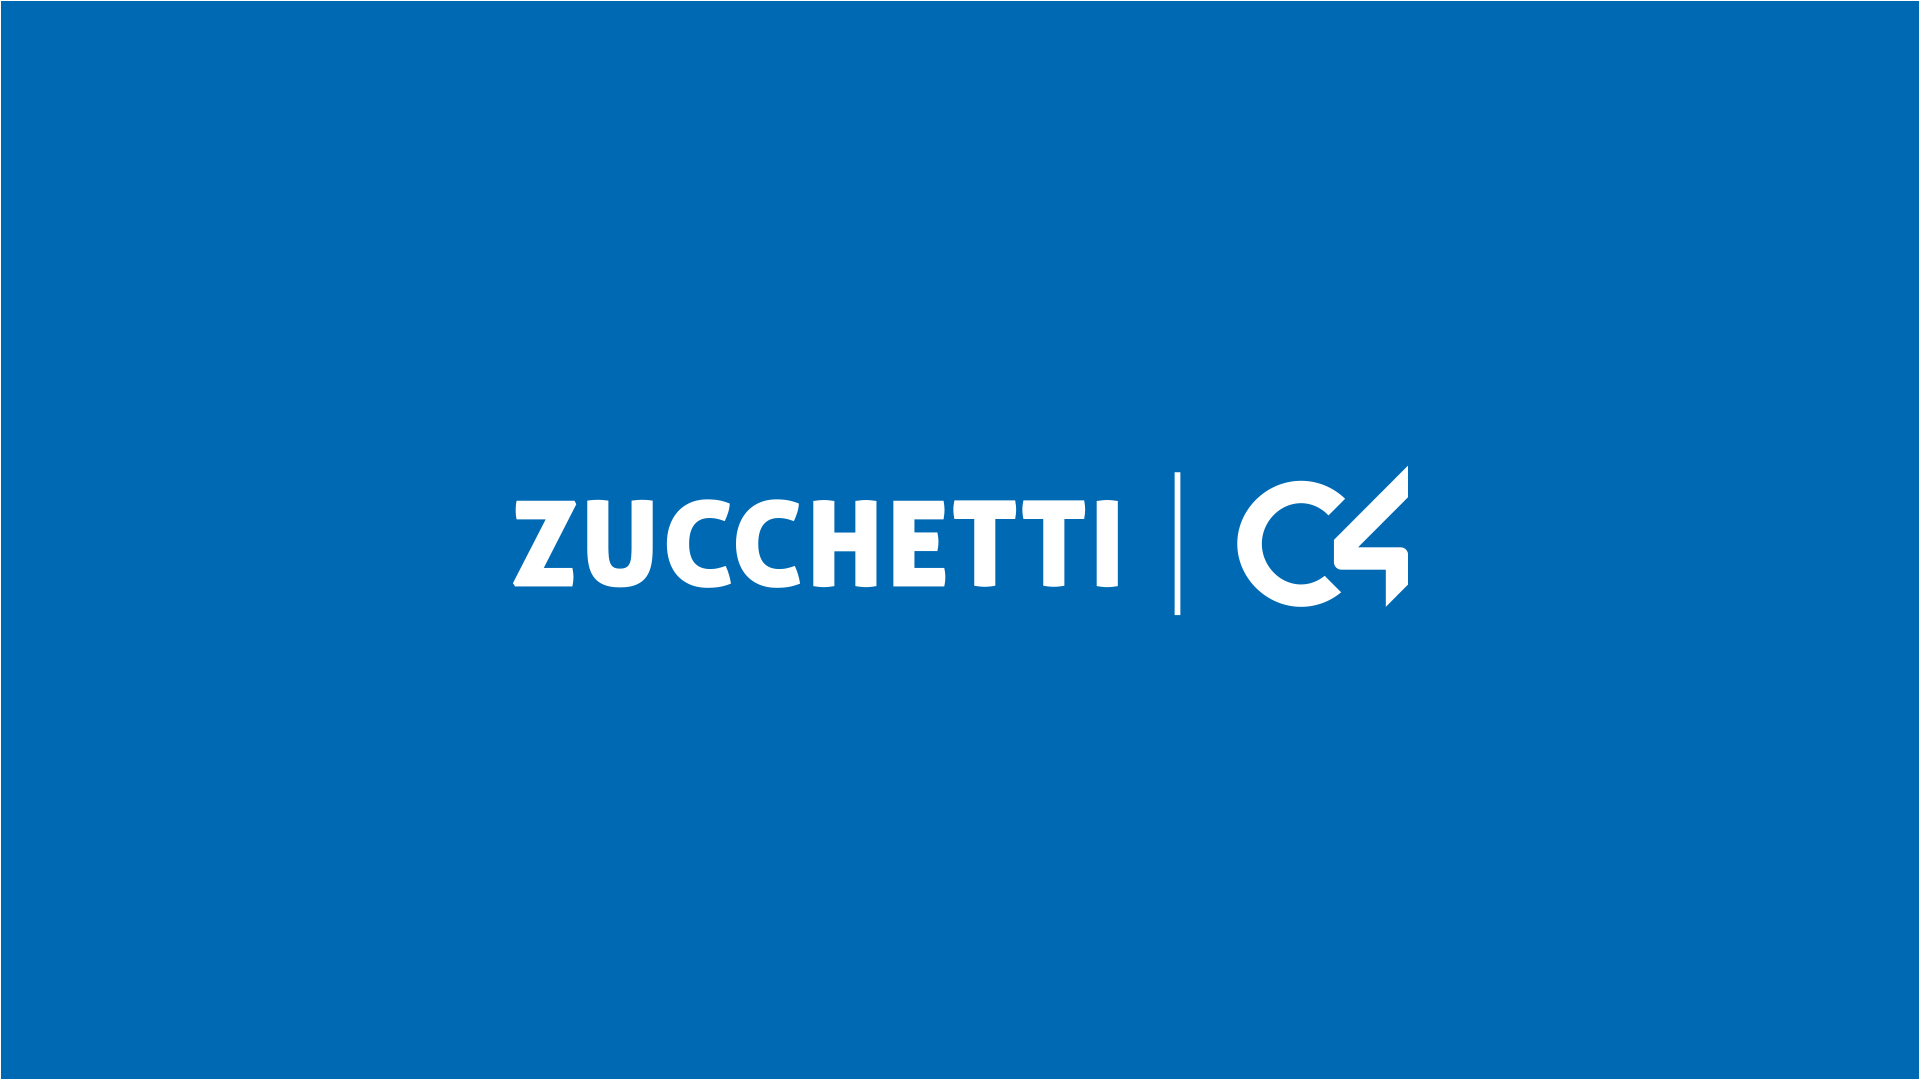 Guia informativo: novo site Zucchetti C4